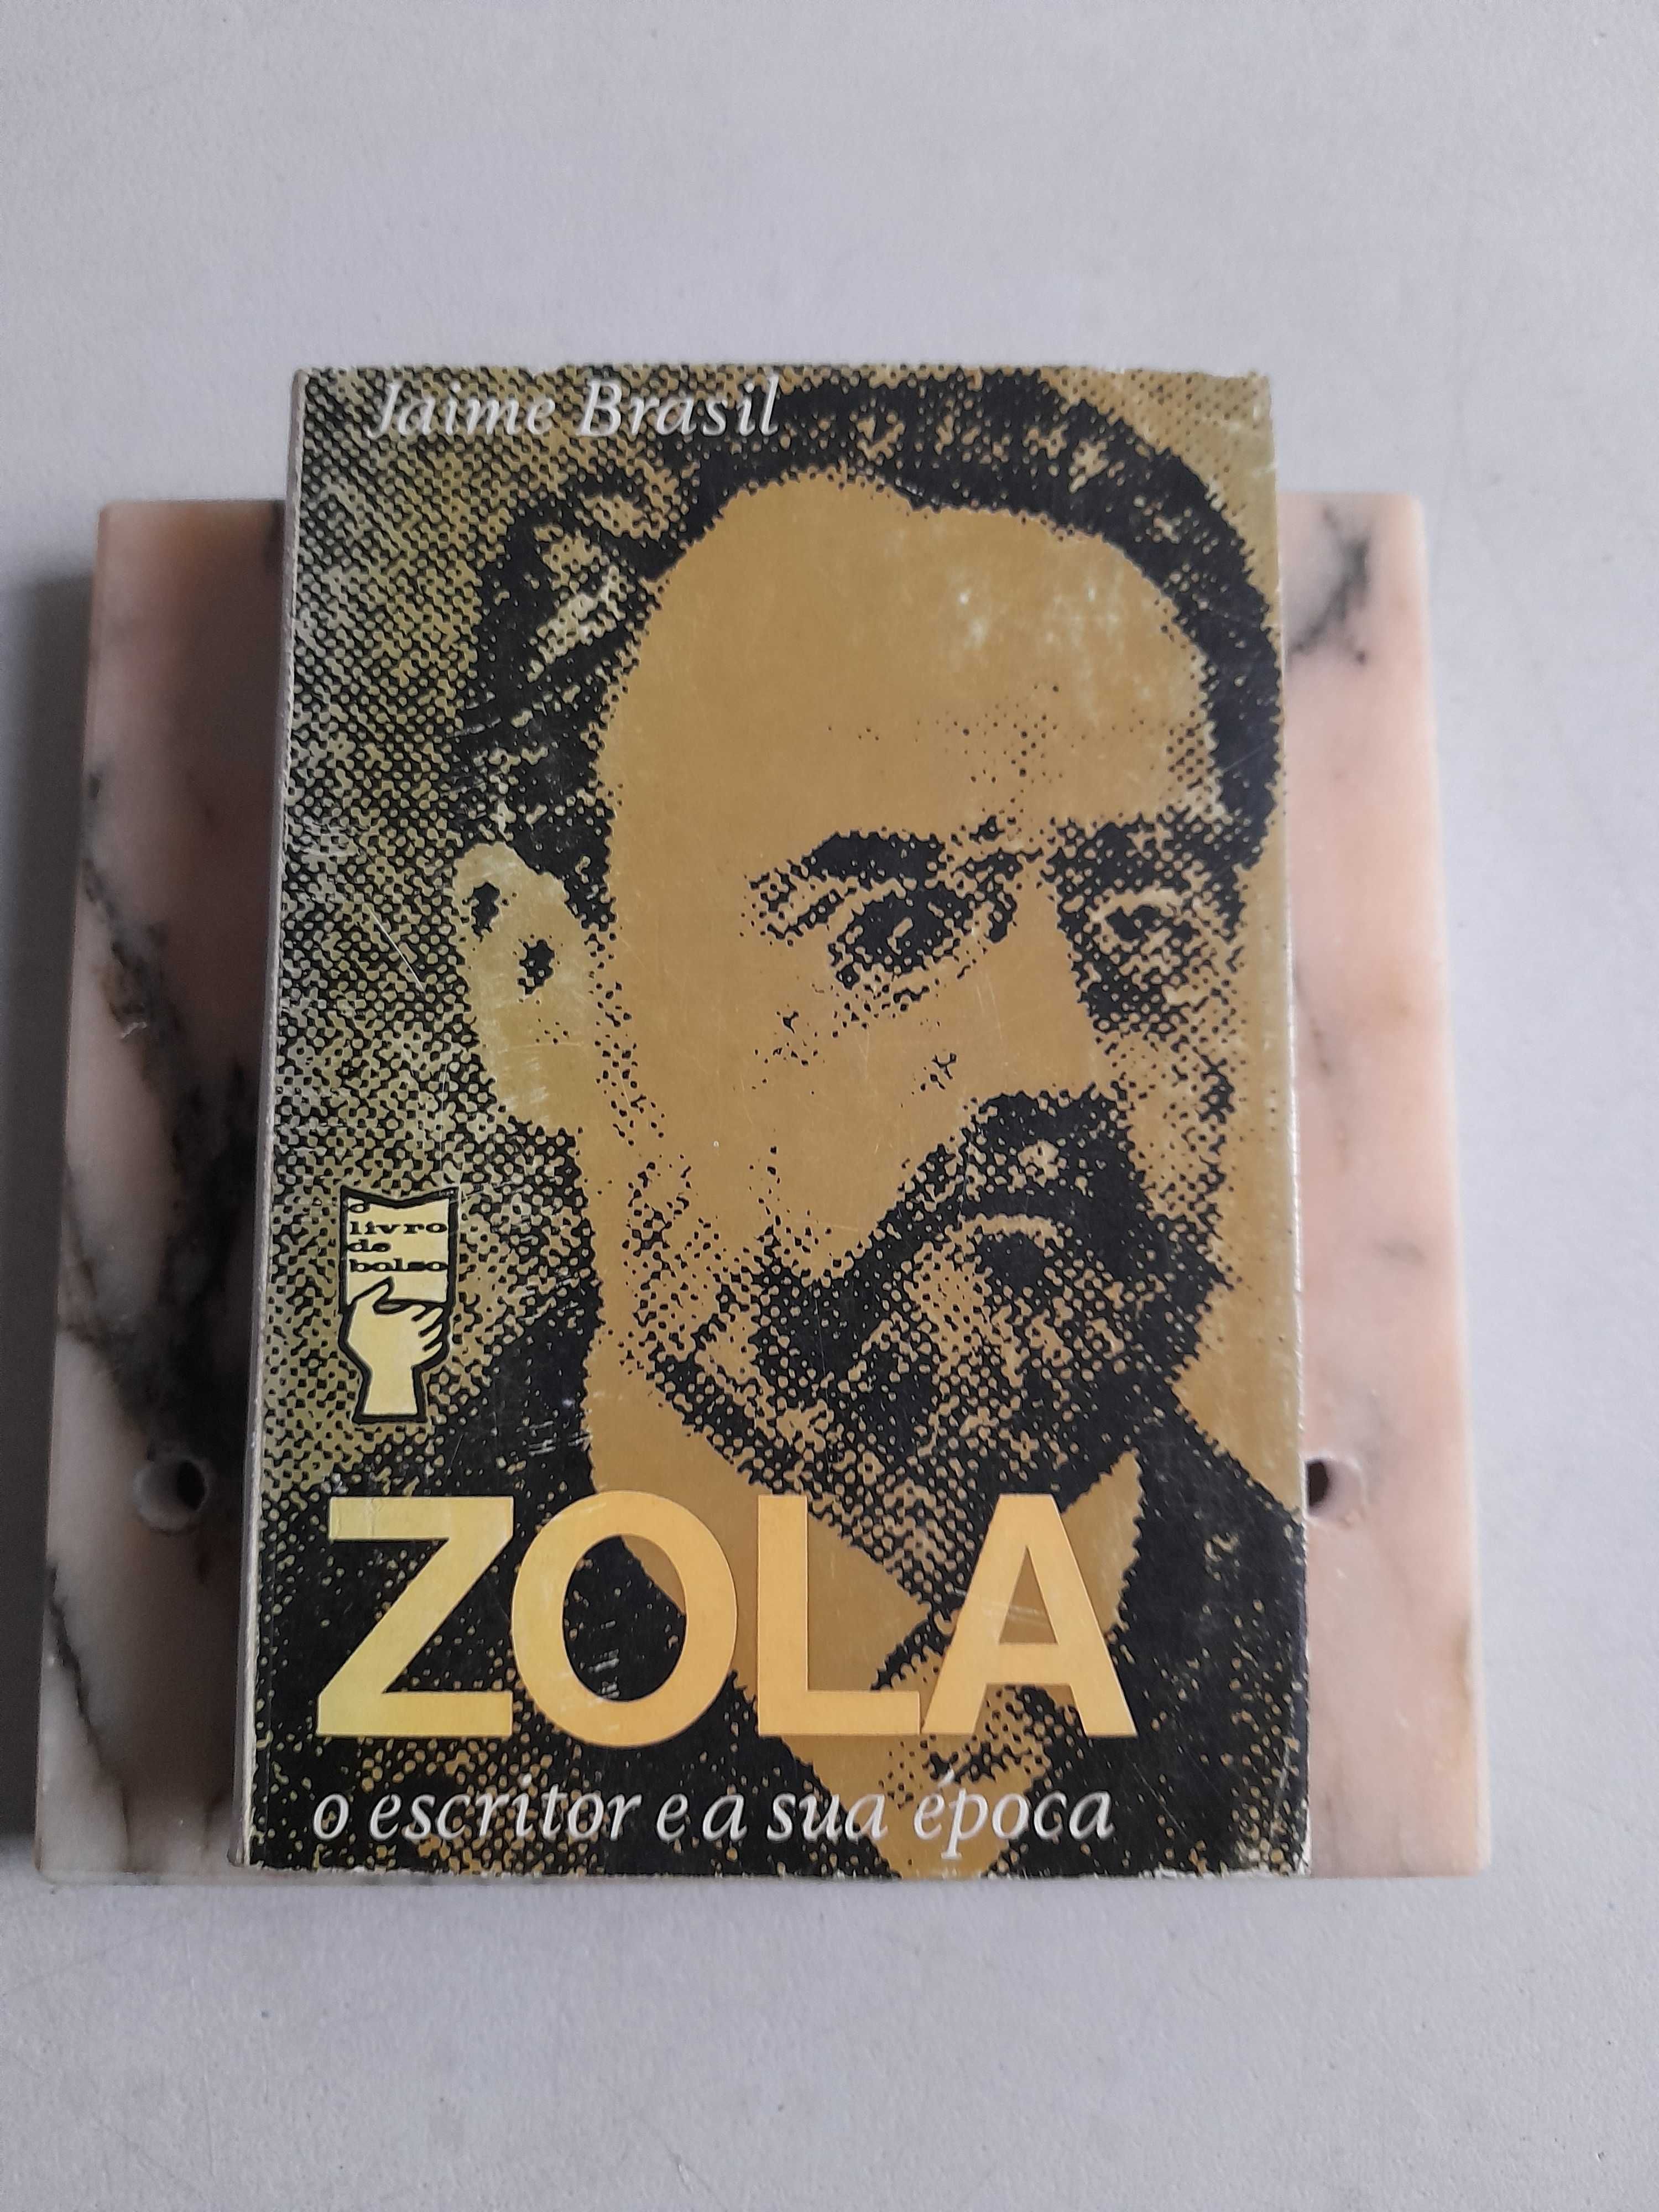 Livro- Ref CxB - jaime brasil - zola, o escritor e a sua época